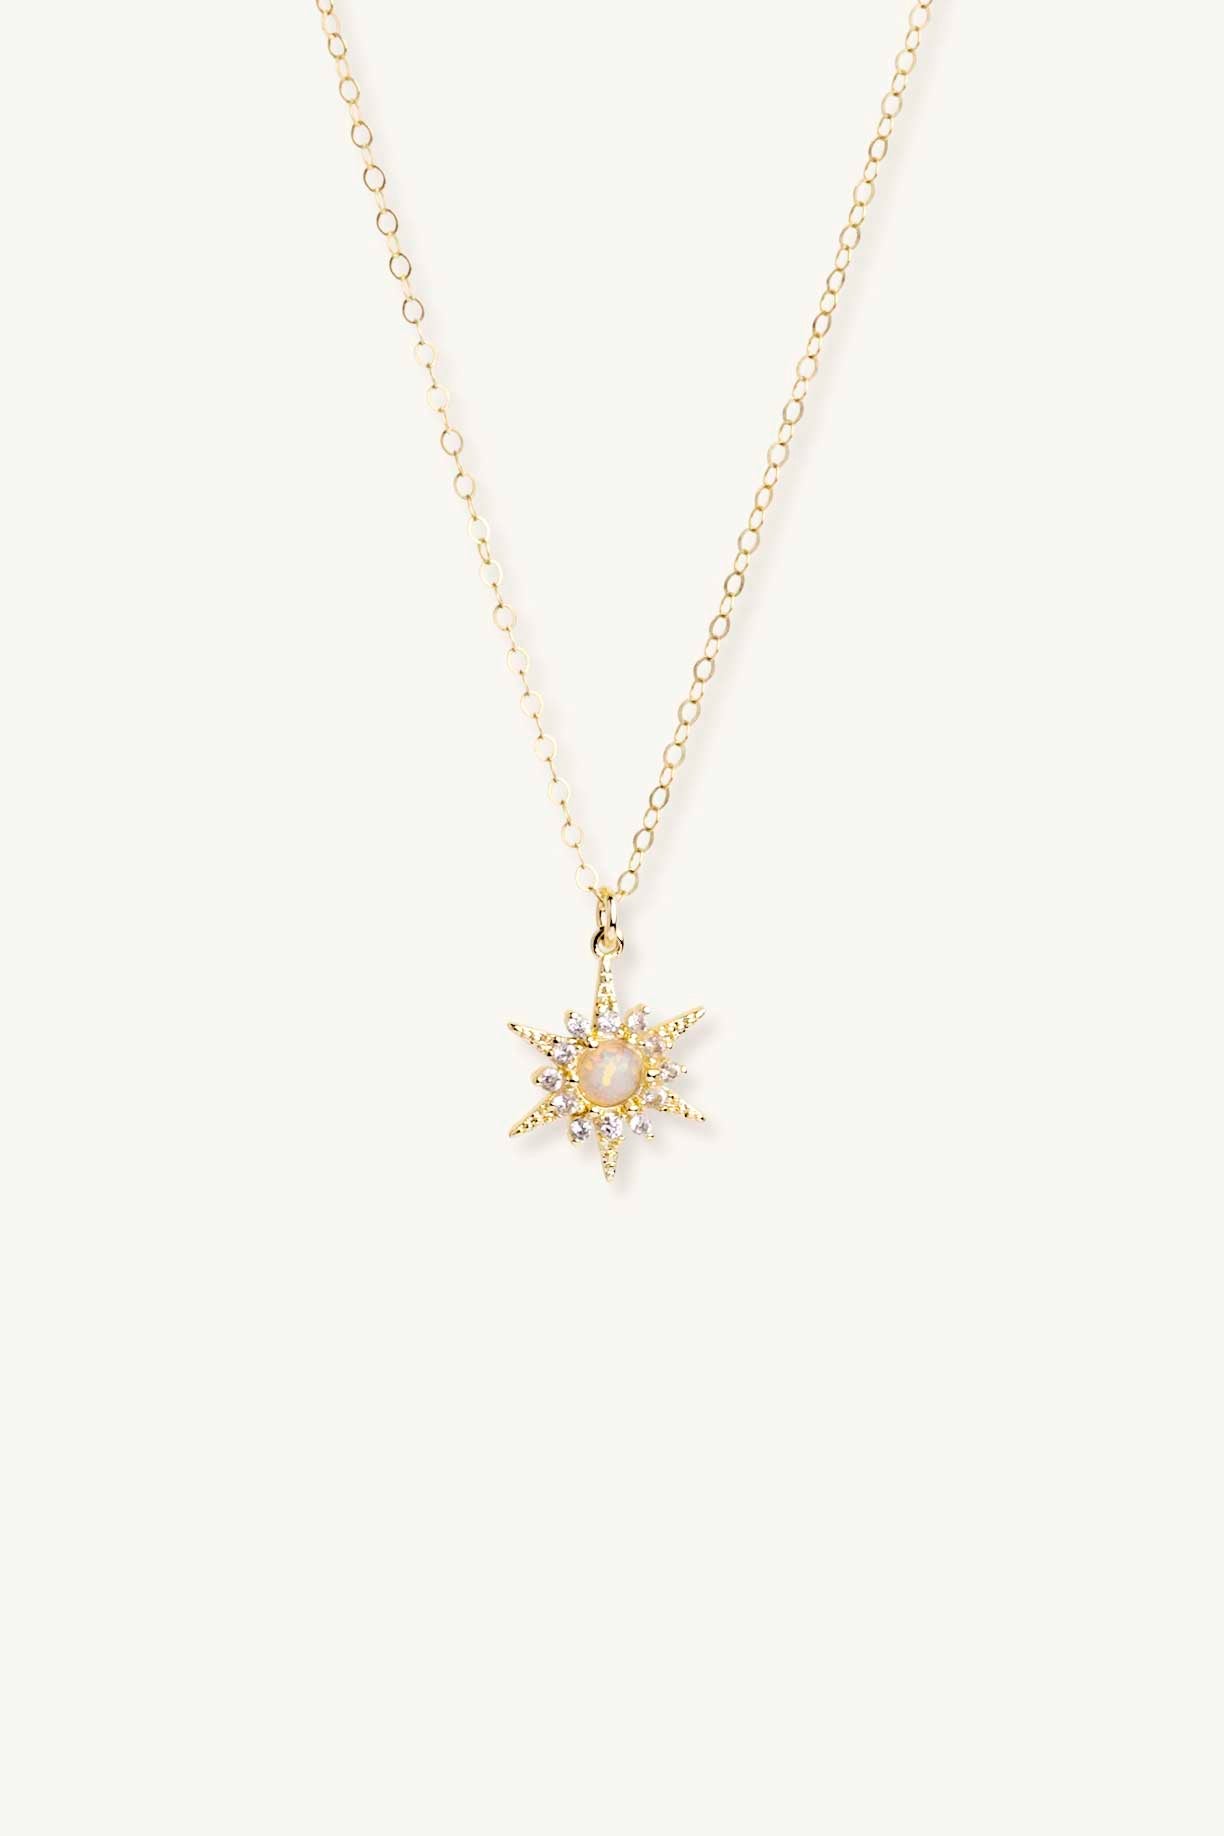 White opal sunburst gold pendant necklace